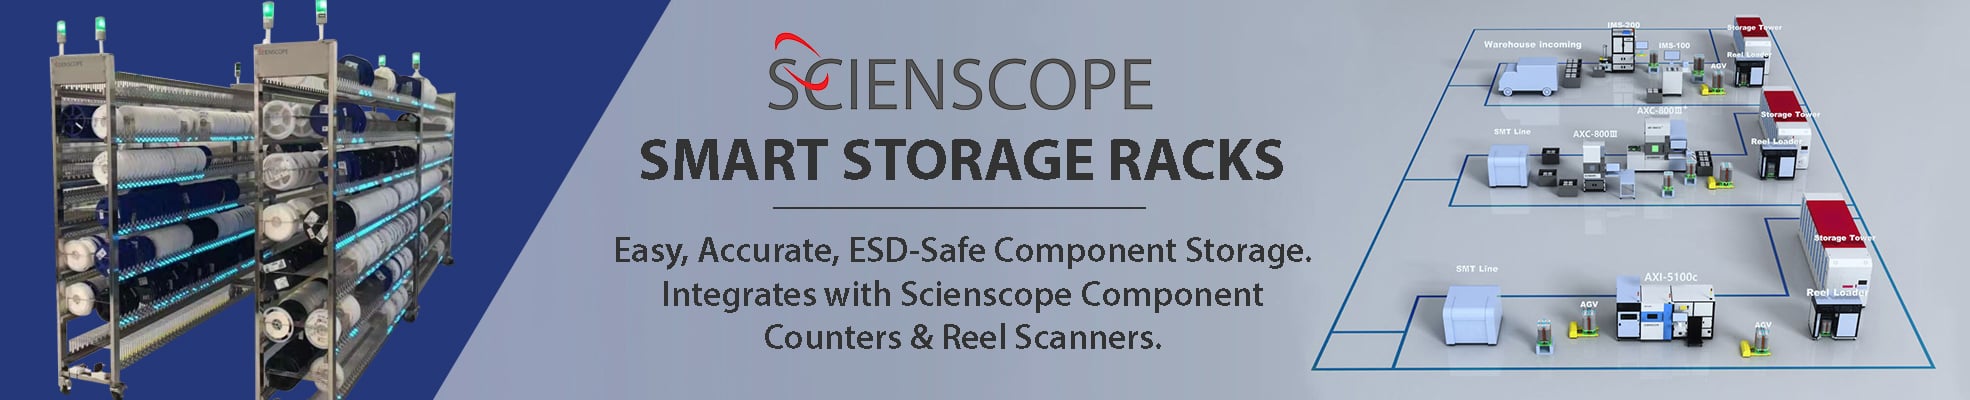 Scienscope Smart Storage Racks